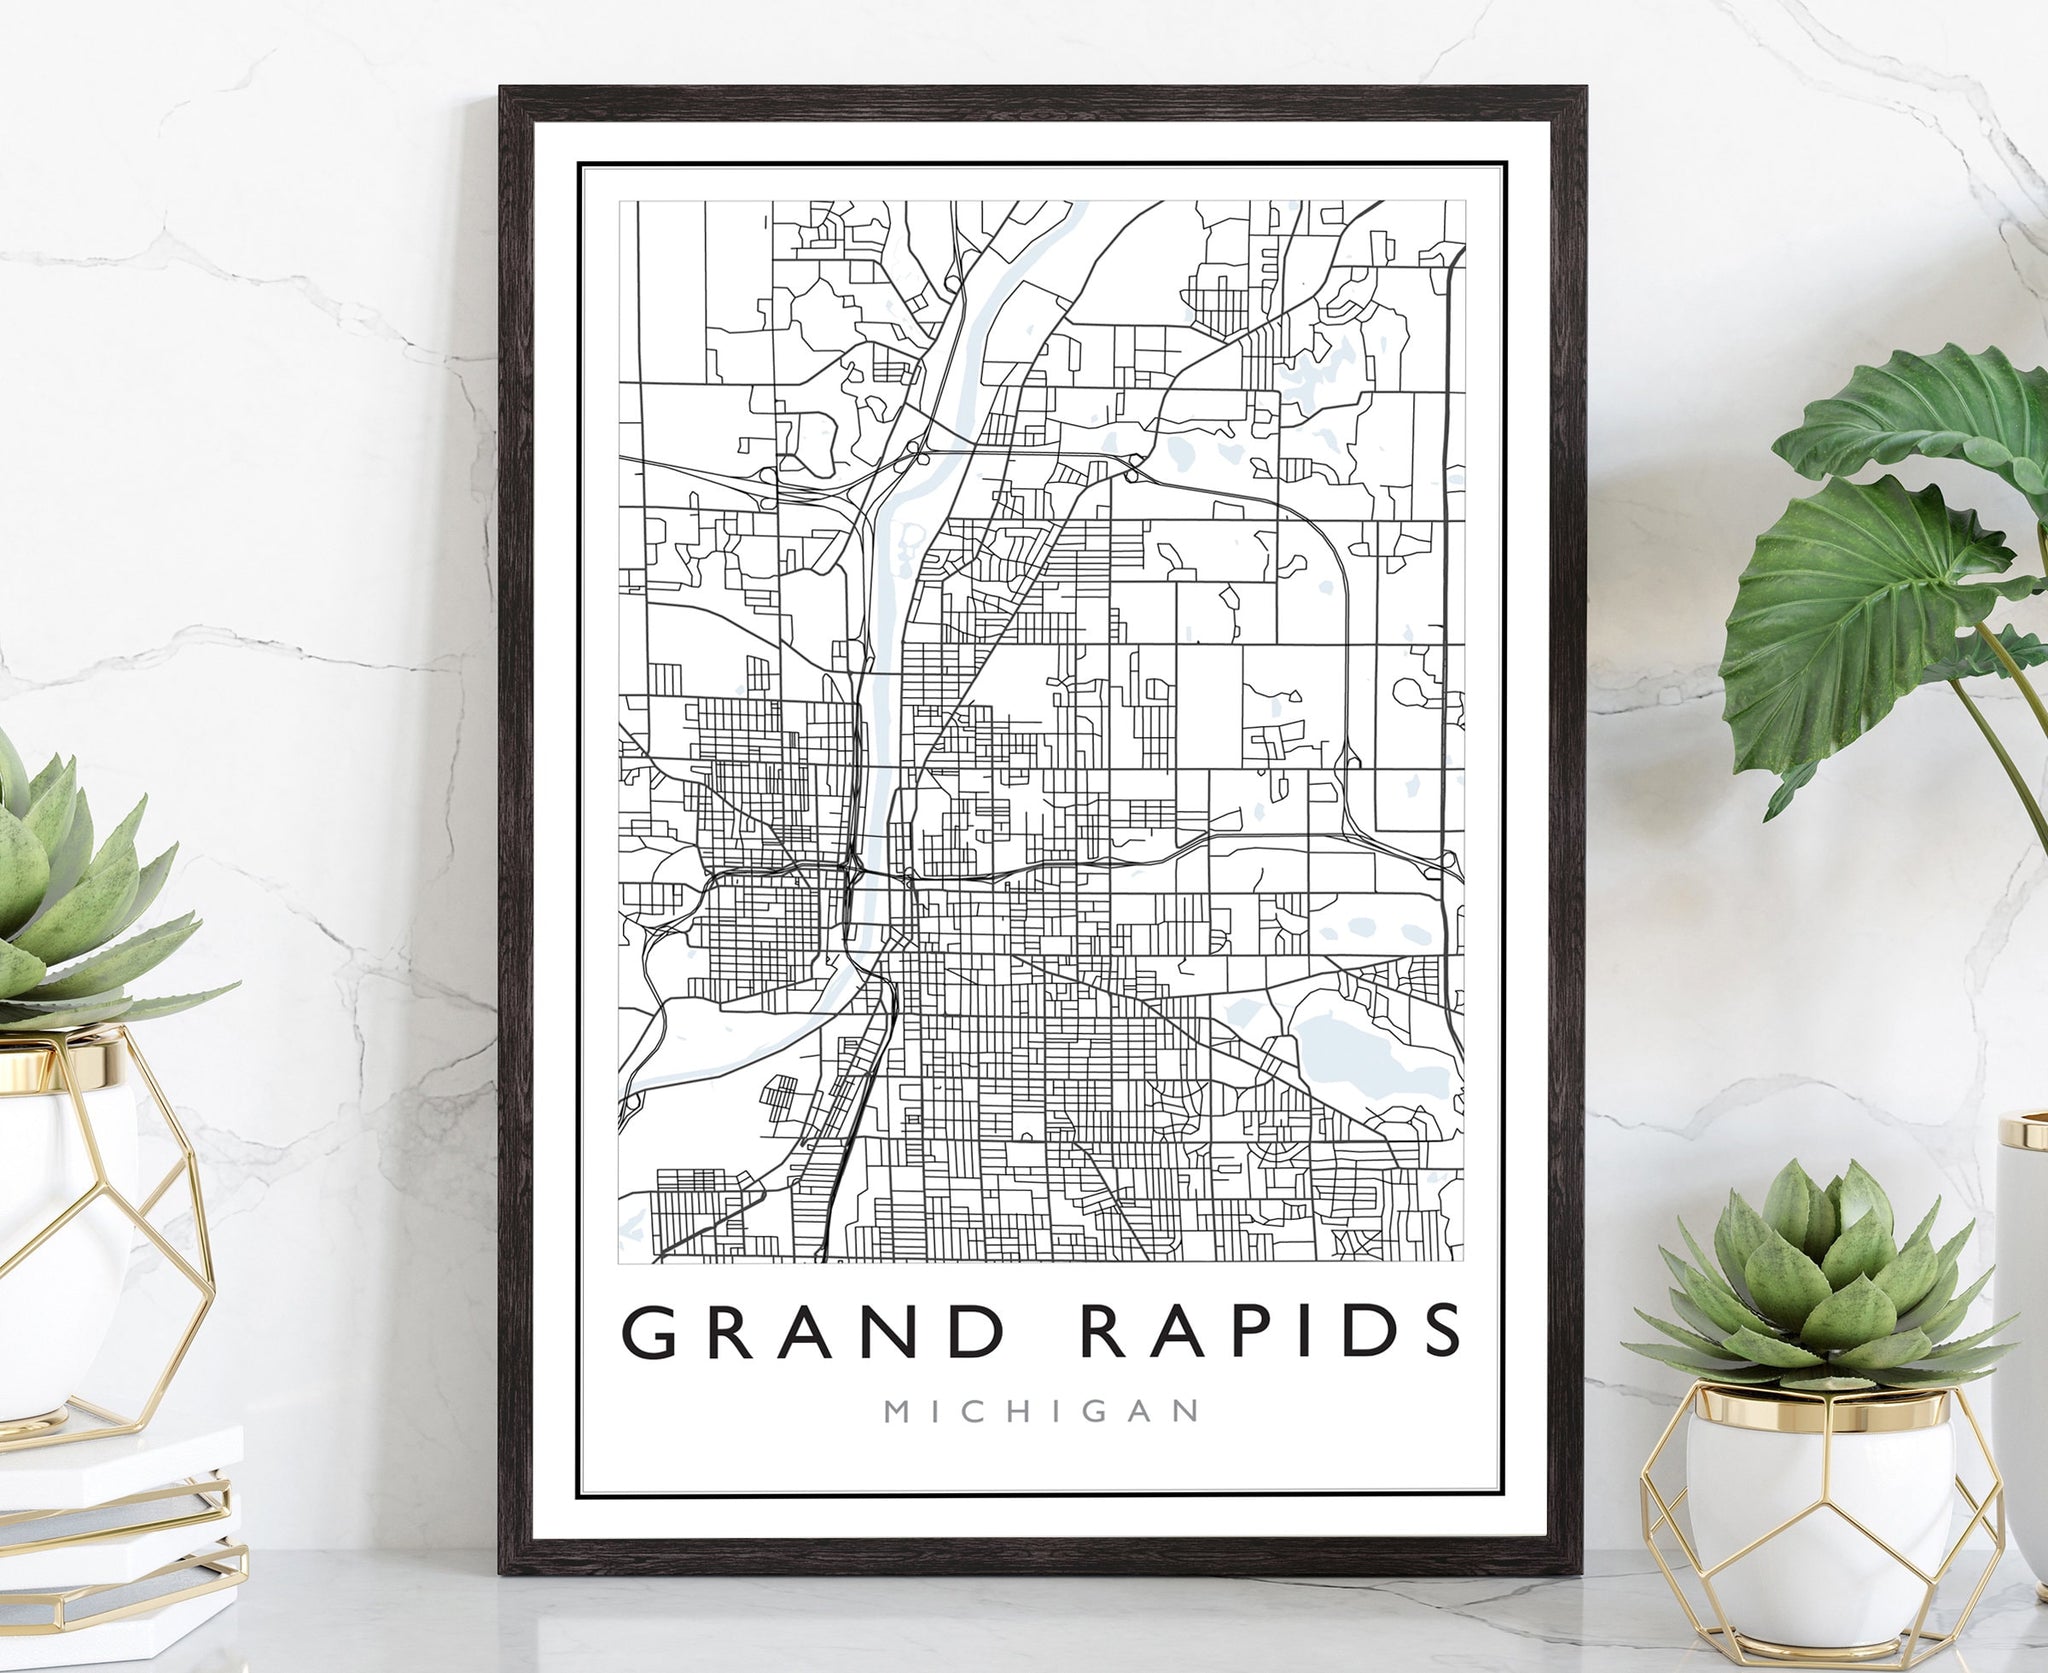 Grand Rapids Michigan City Map, Michigan City Road Map Poster, City Street Map Print, Modern US City Map, Home Art Decor, Office Wall Art